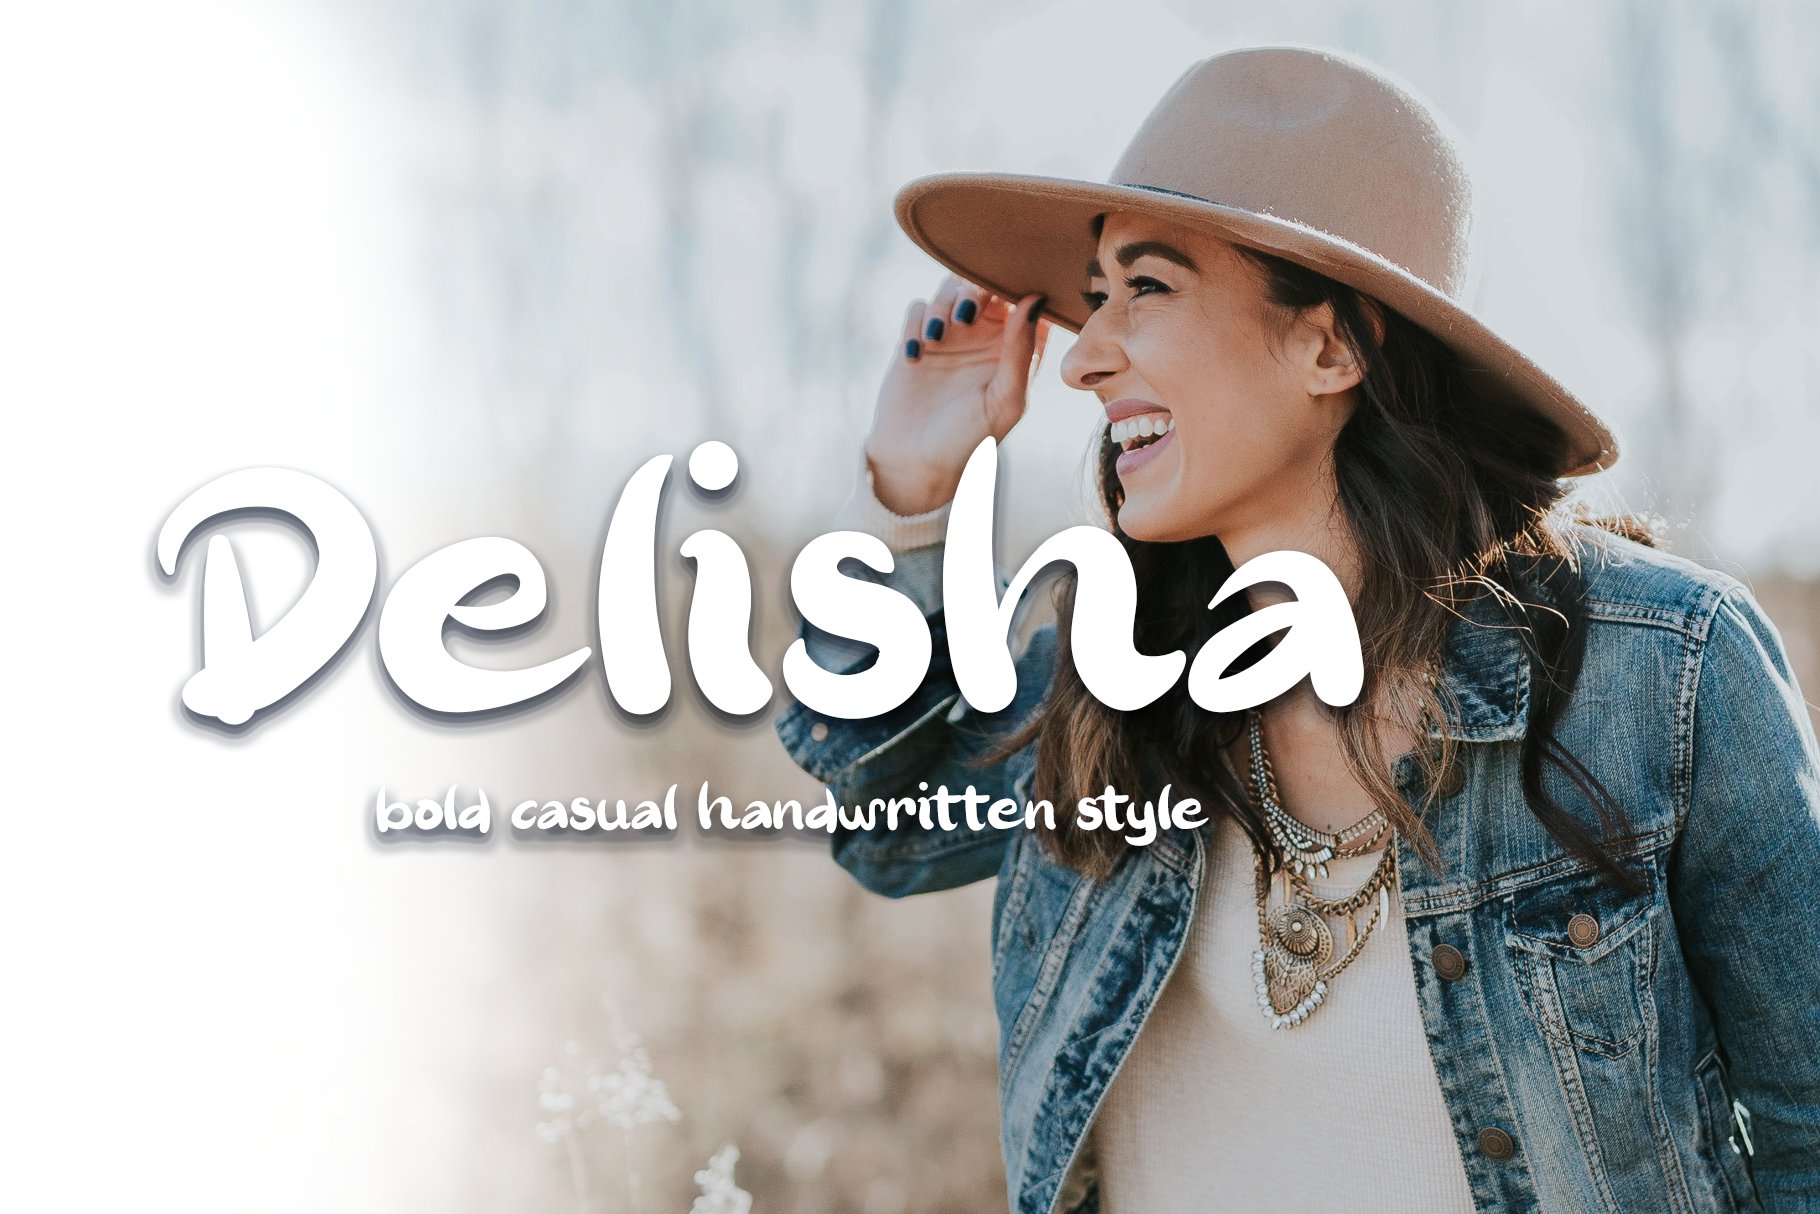 Delisha - Handwritten Font cover image.